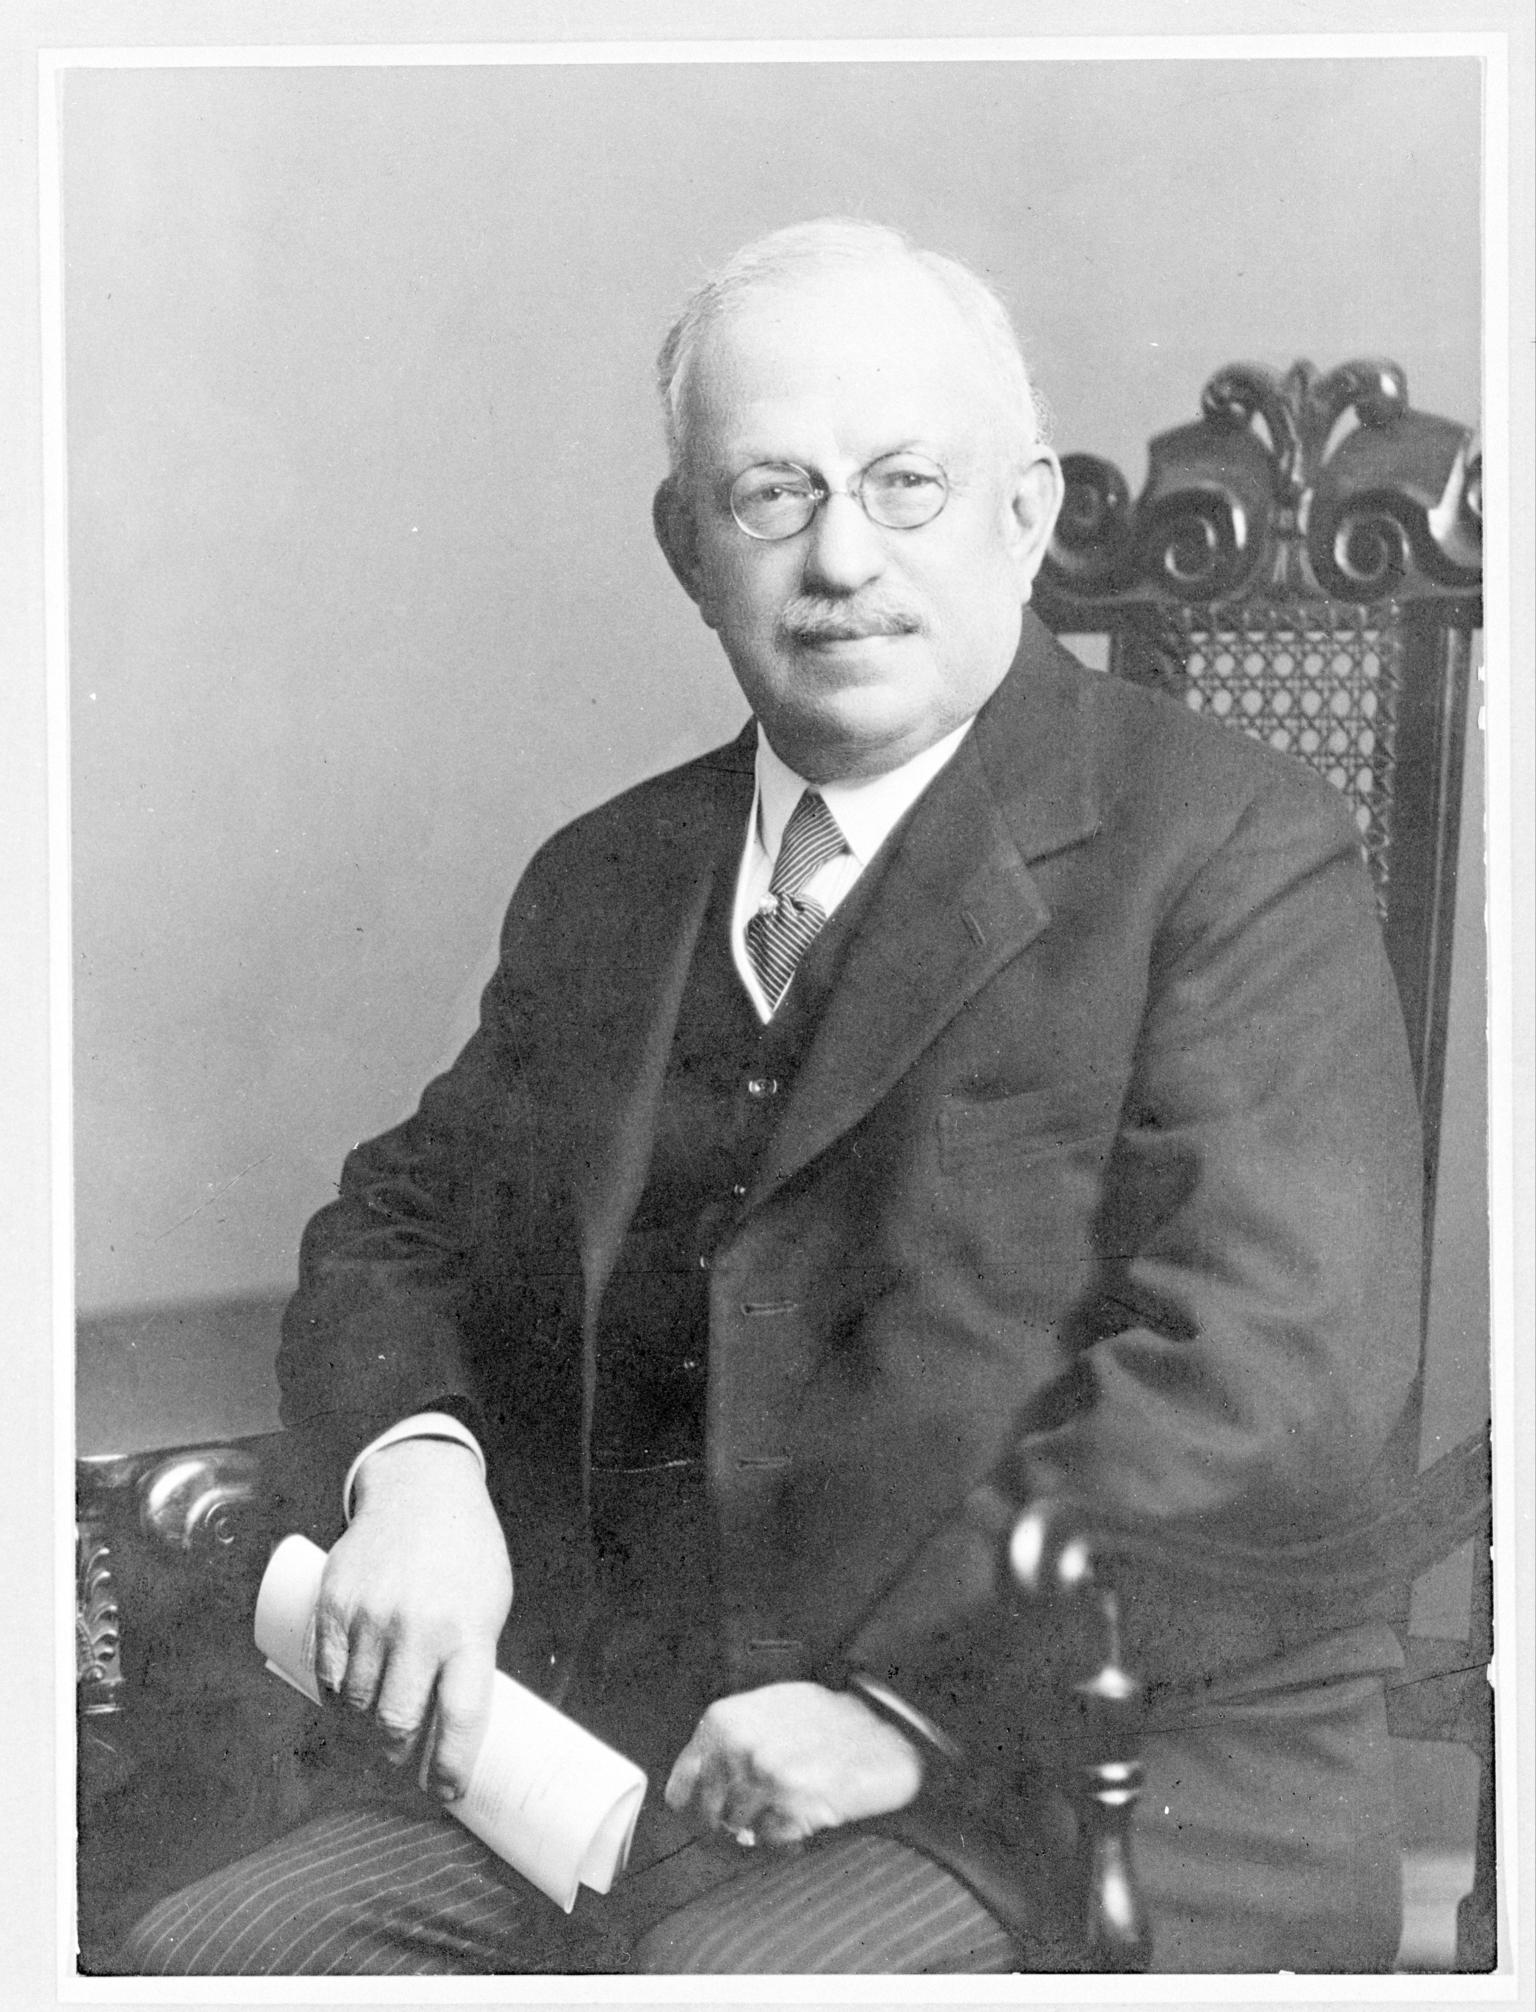 Sir William Reardon Smith, 1856-1935, photograph